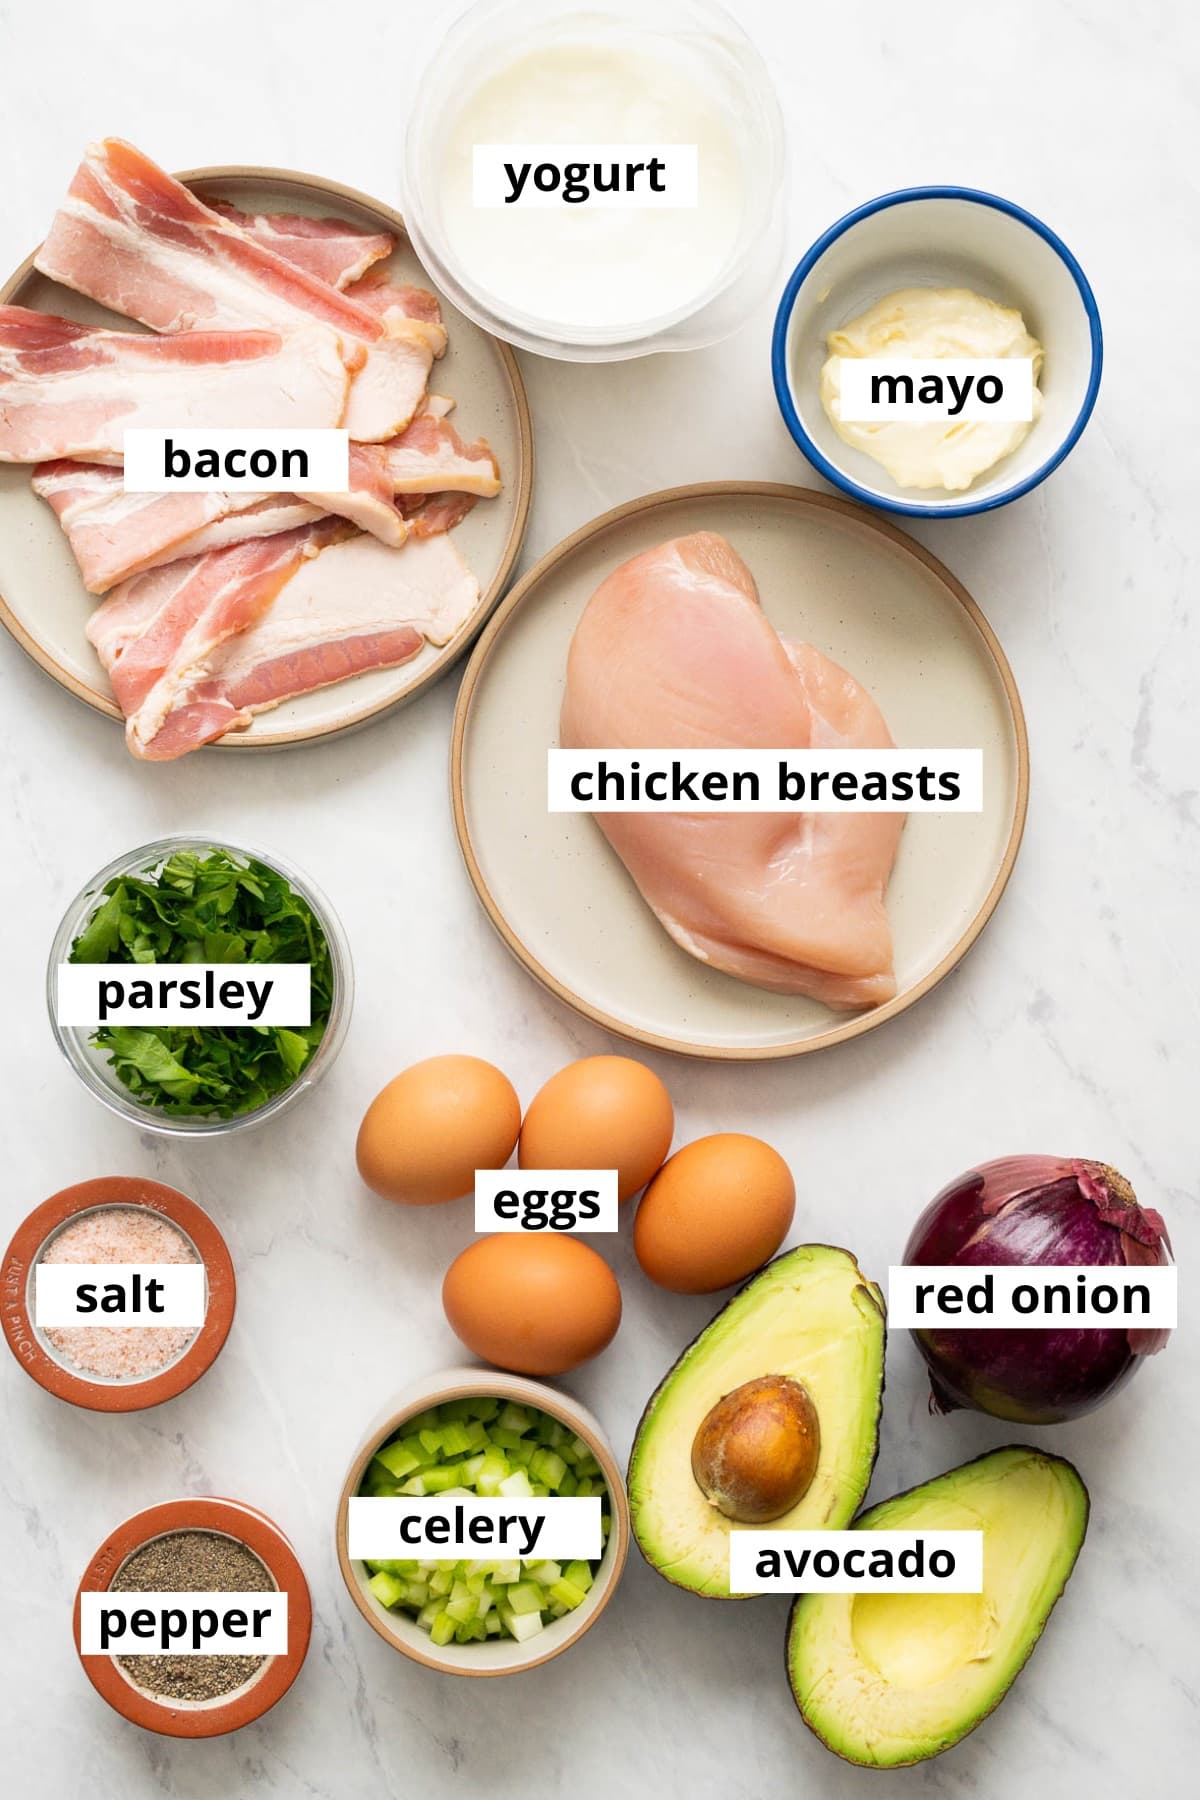 Chicken breasts, bacon, yogurt, mayo, parsley, eggs, red onion, avocado, celery, salt and pepper.